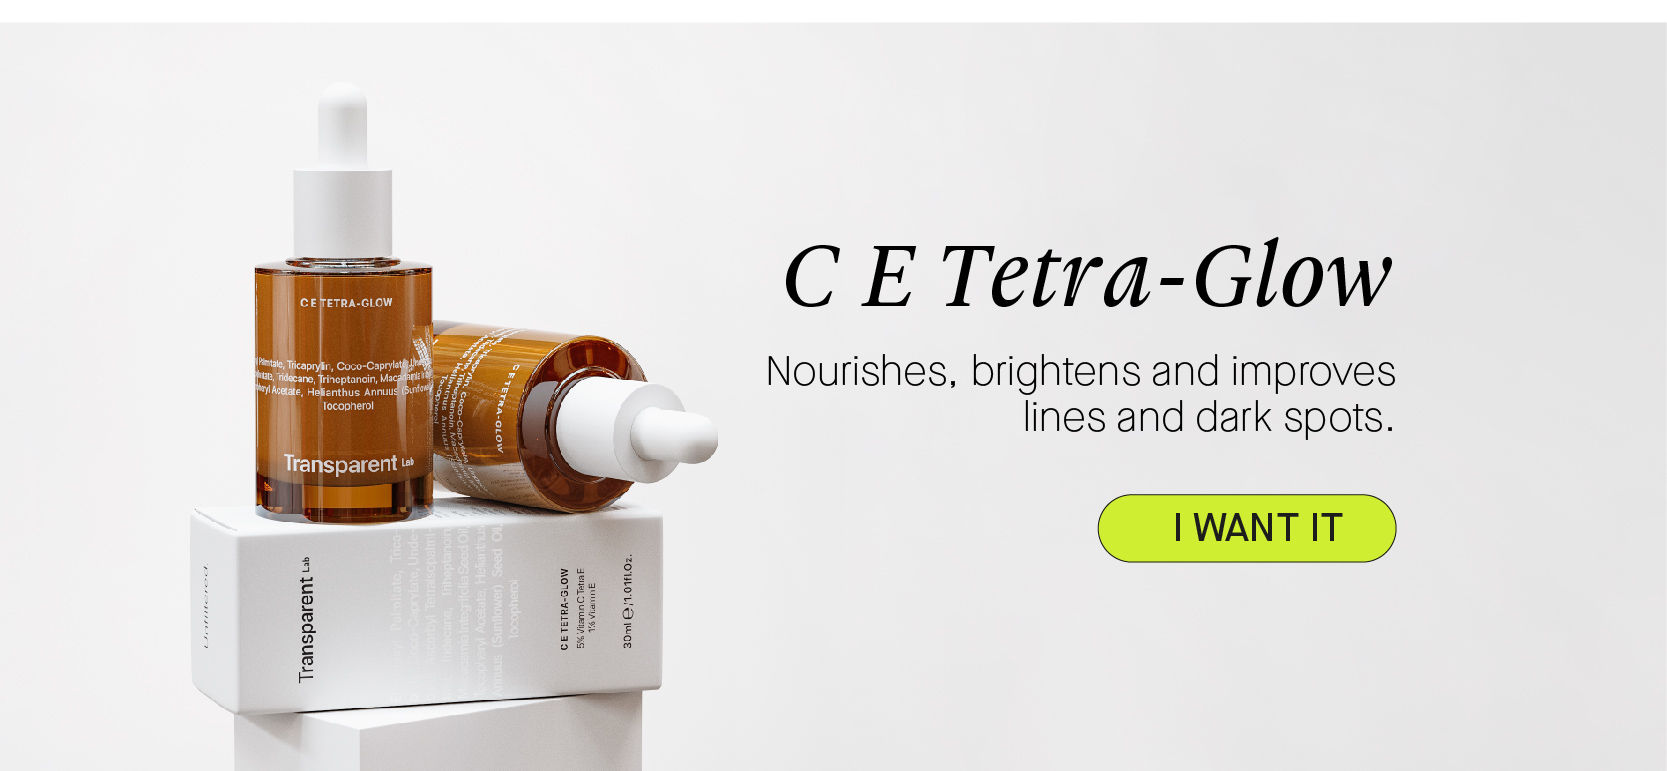 C E Tetra-Glow Nourishes, brightens and improves lines and dark spots. Transparent w CETETRA-GLOW iamnC T YeviamnE 1 20m @ 1.01M0; 